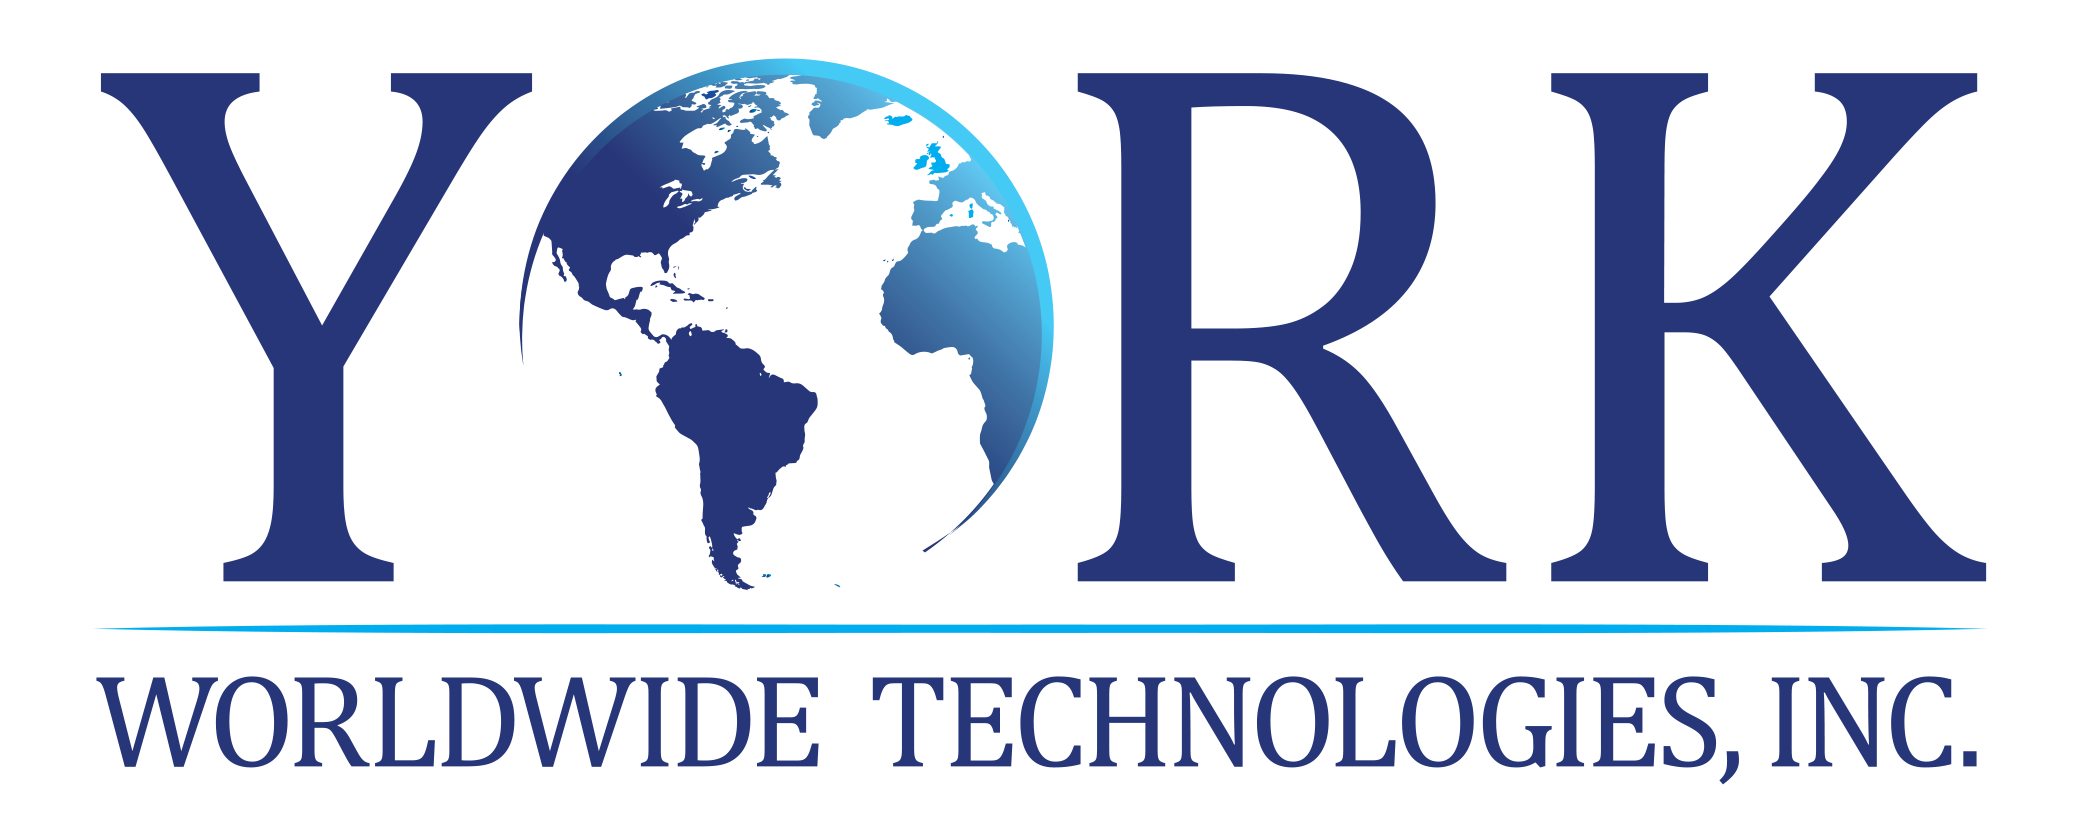 York Worldwide Technologies, Inc. logo